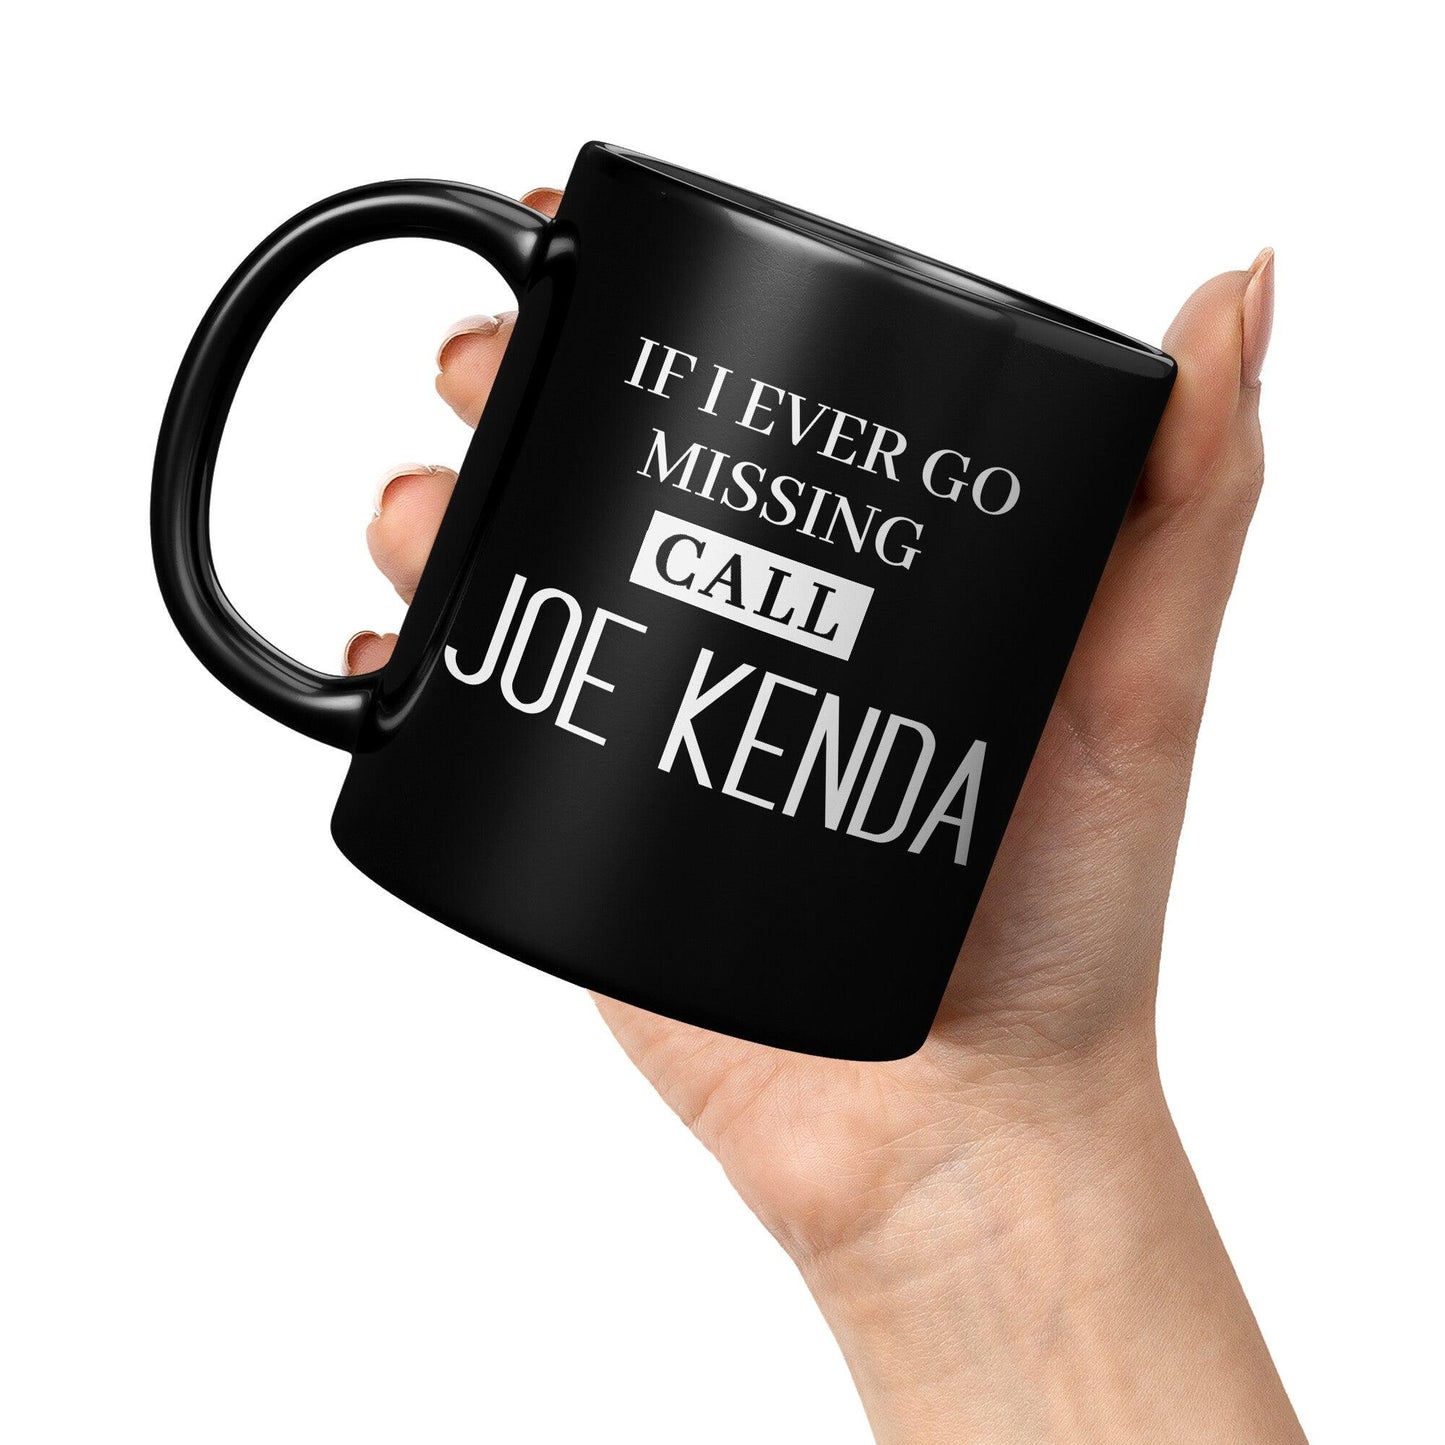 If I Ever Missing Call Joe Kenda Black Mug - TheGivenGet